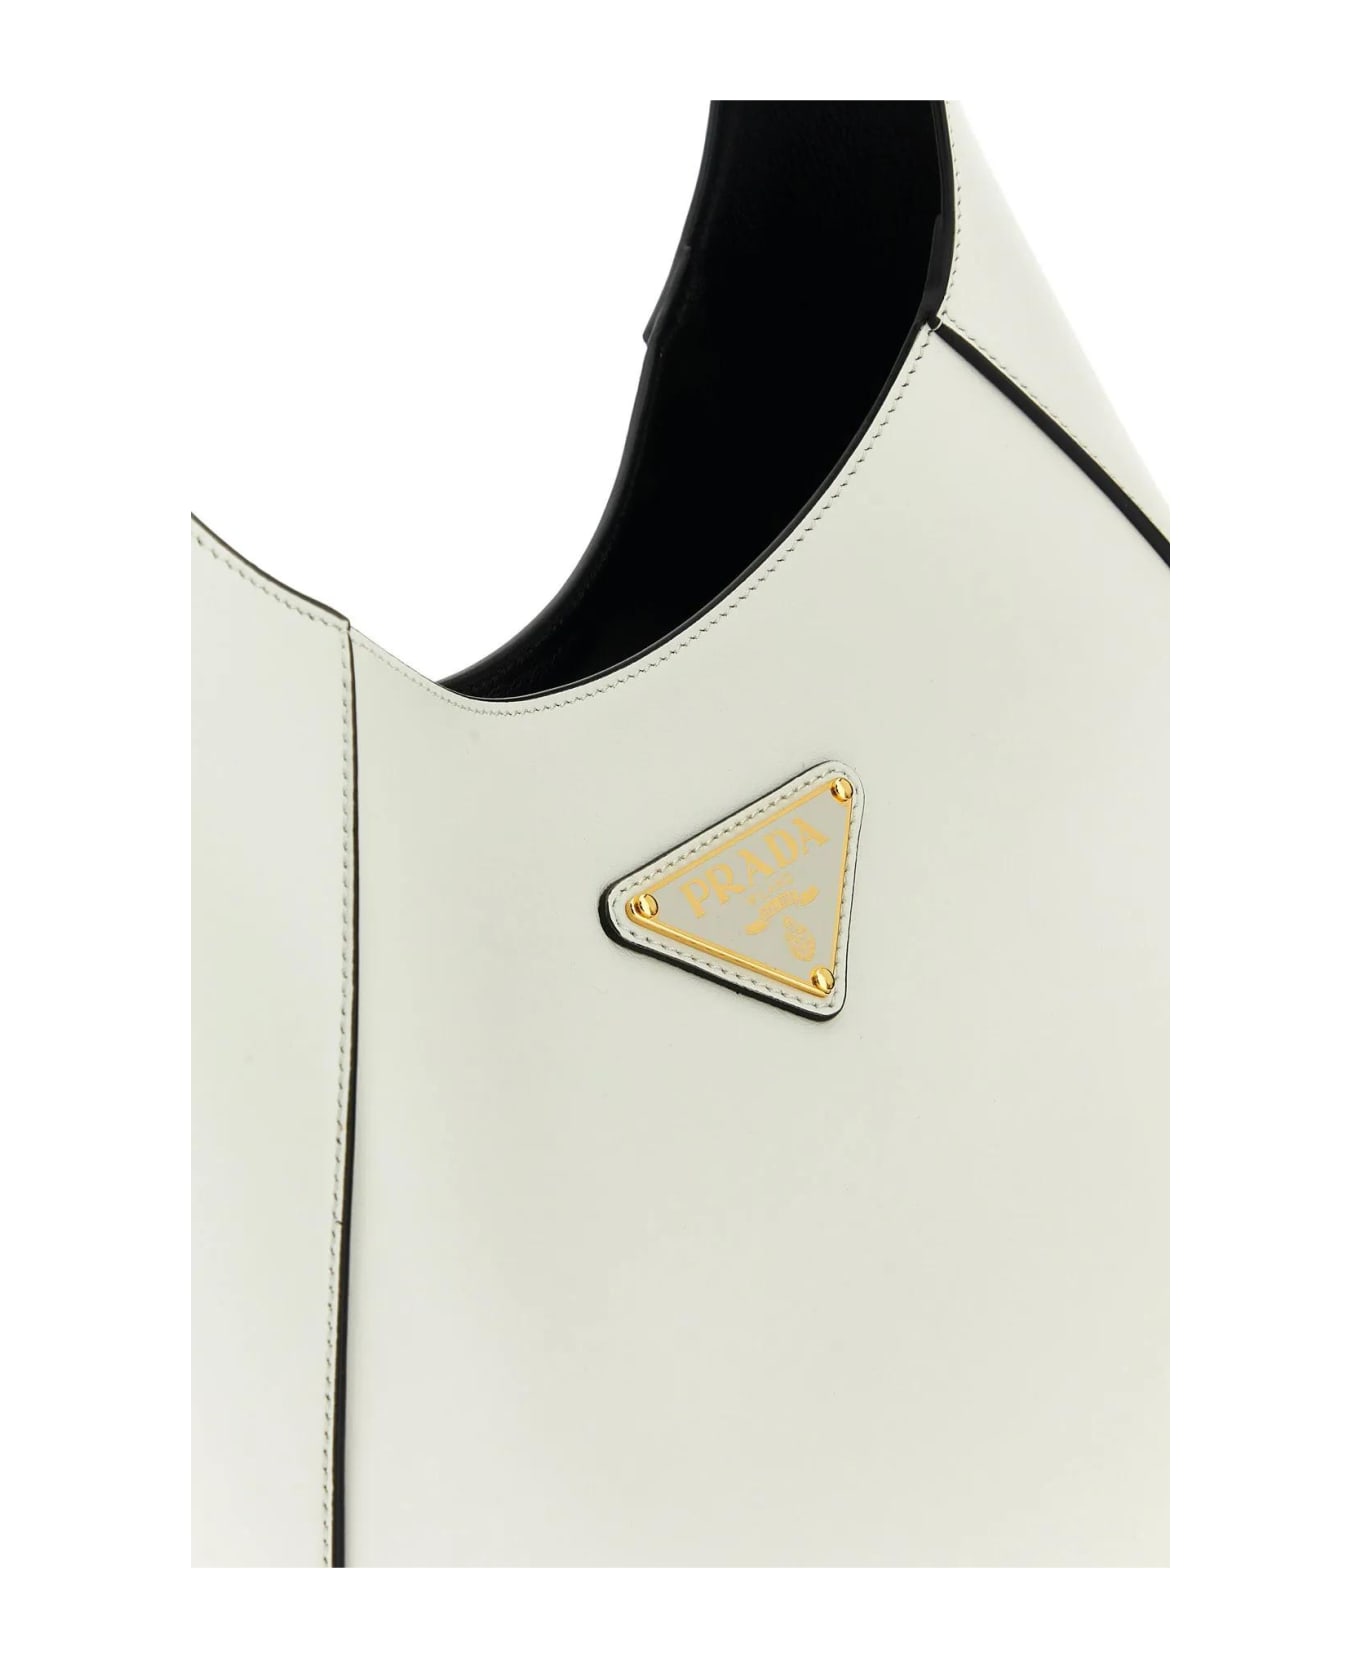 Prada White Leather Shoulder Bag - White